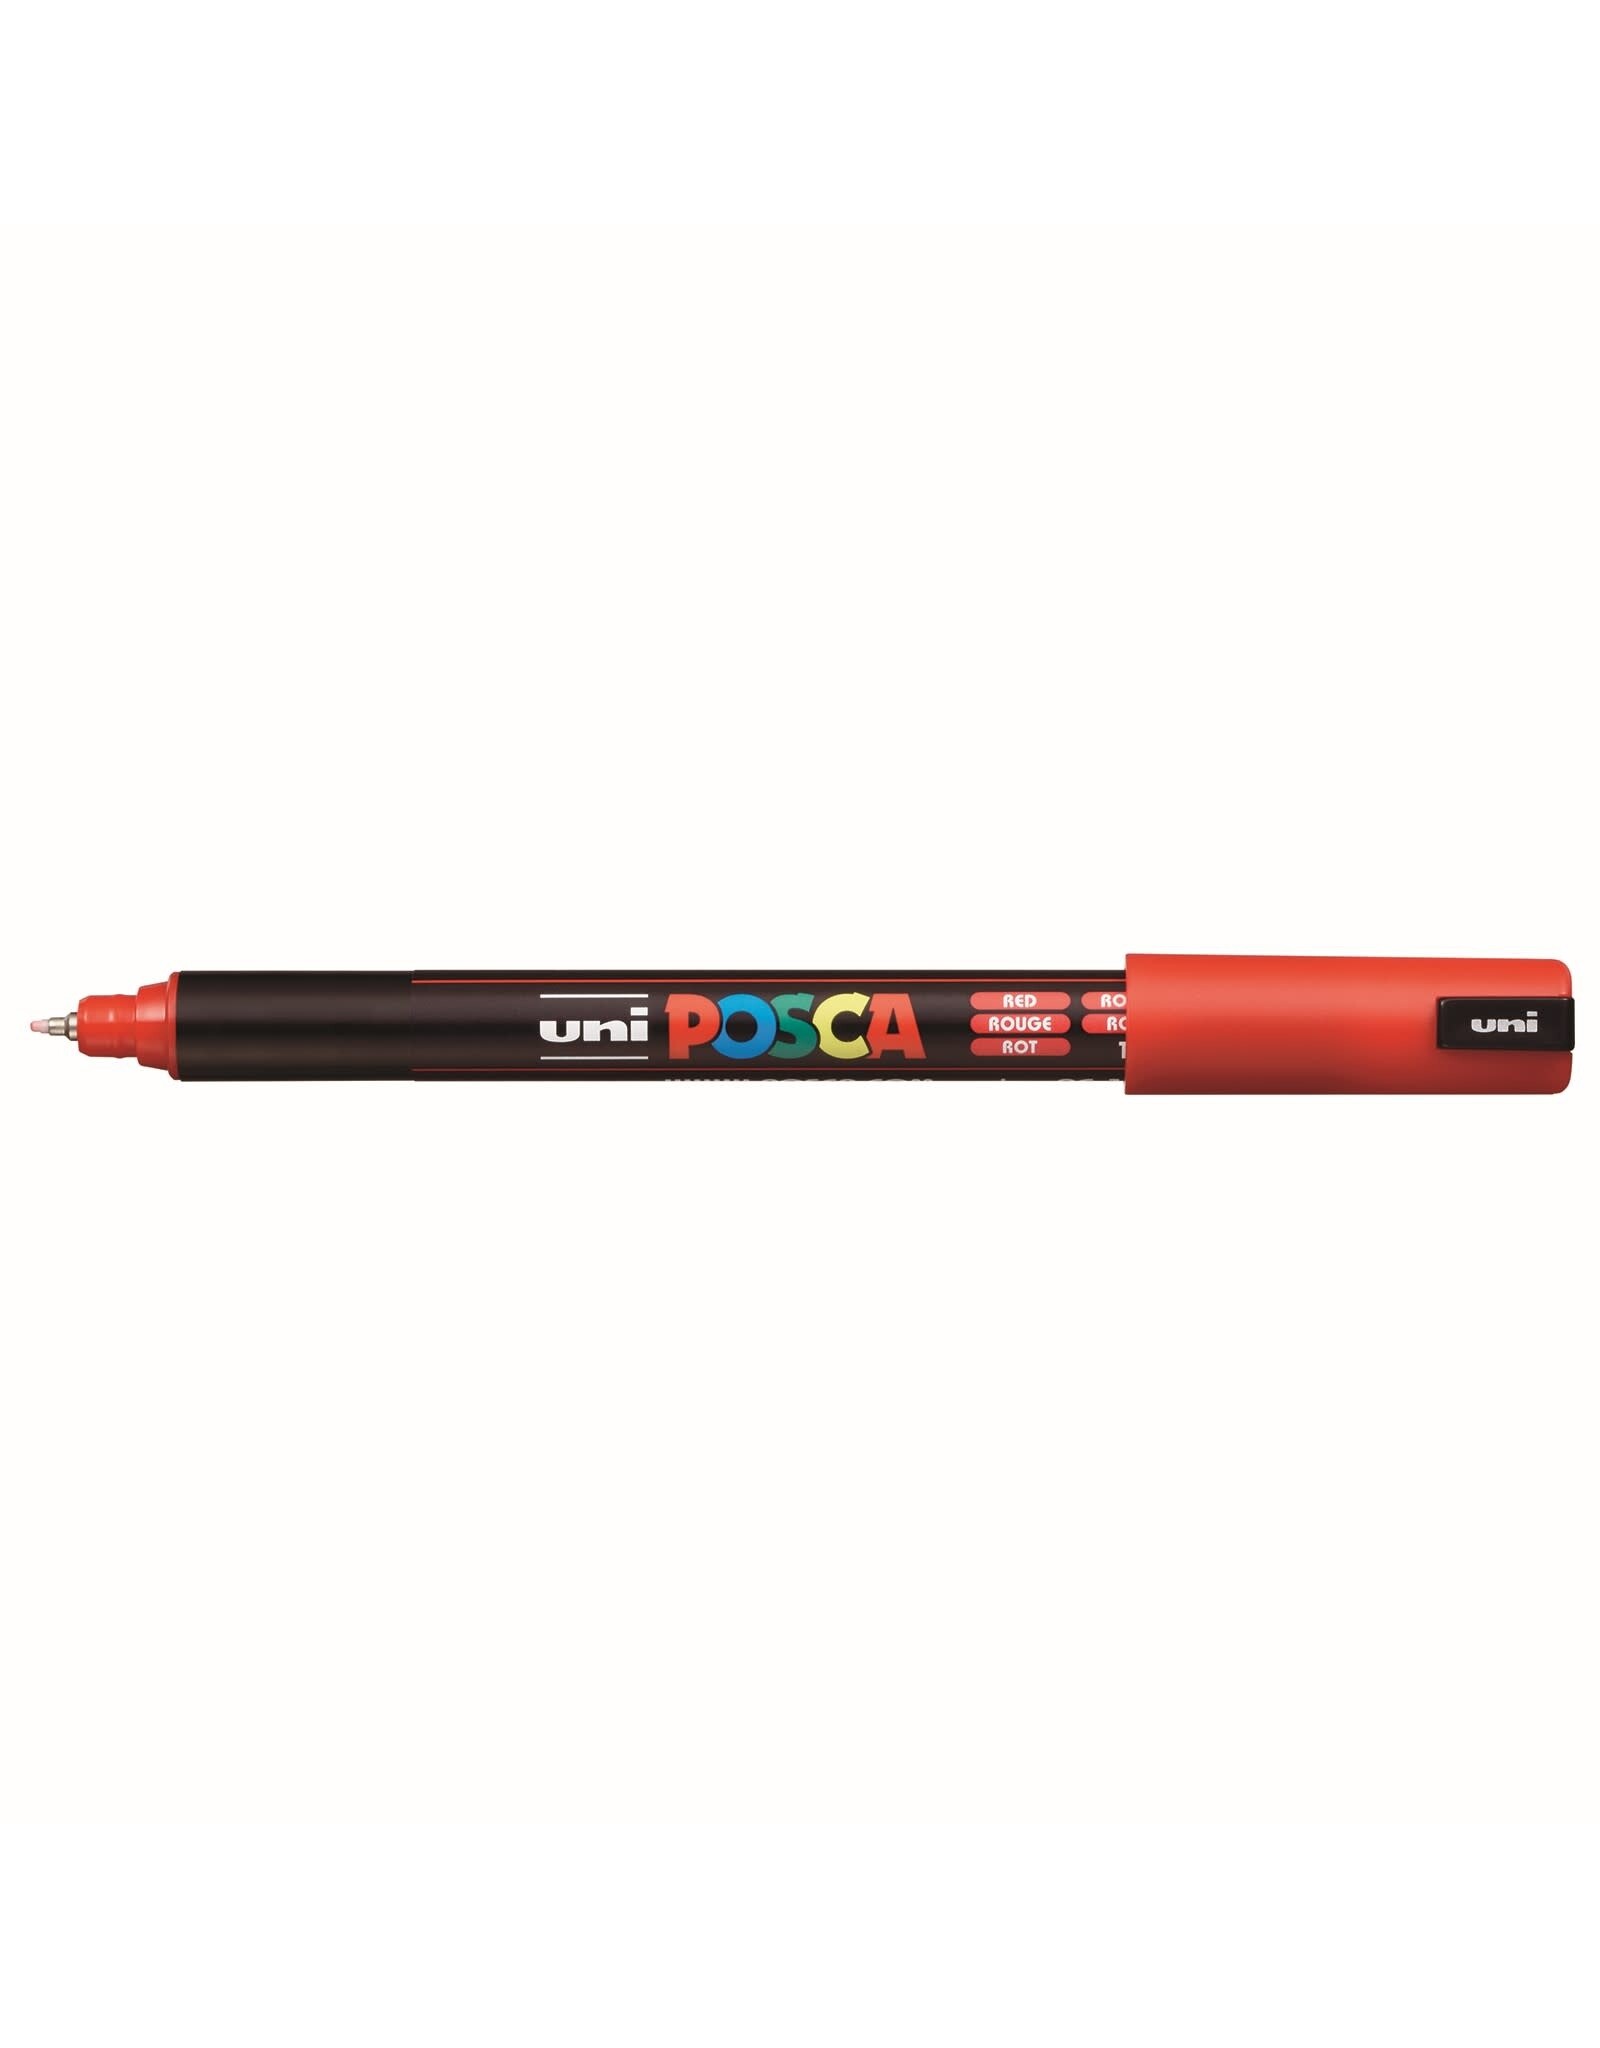 POSCA Uni POSCA Paint Marker, Extra Fine Metal Tip, Red